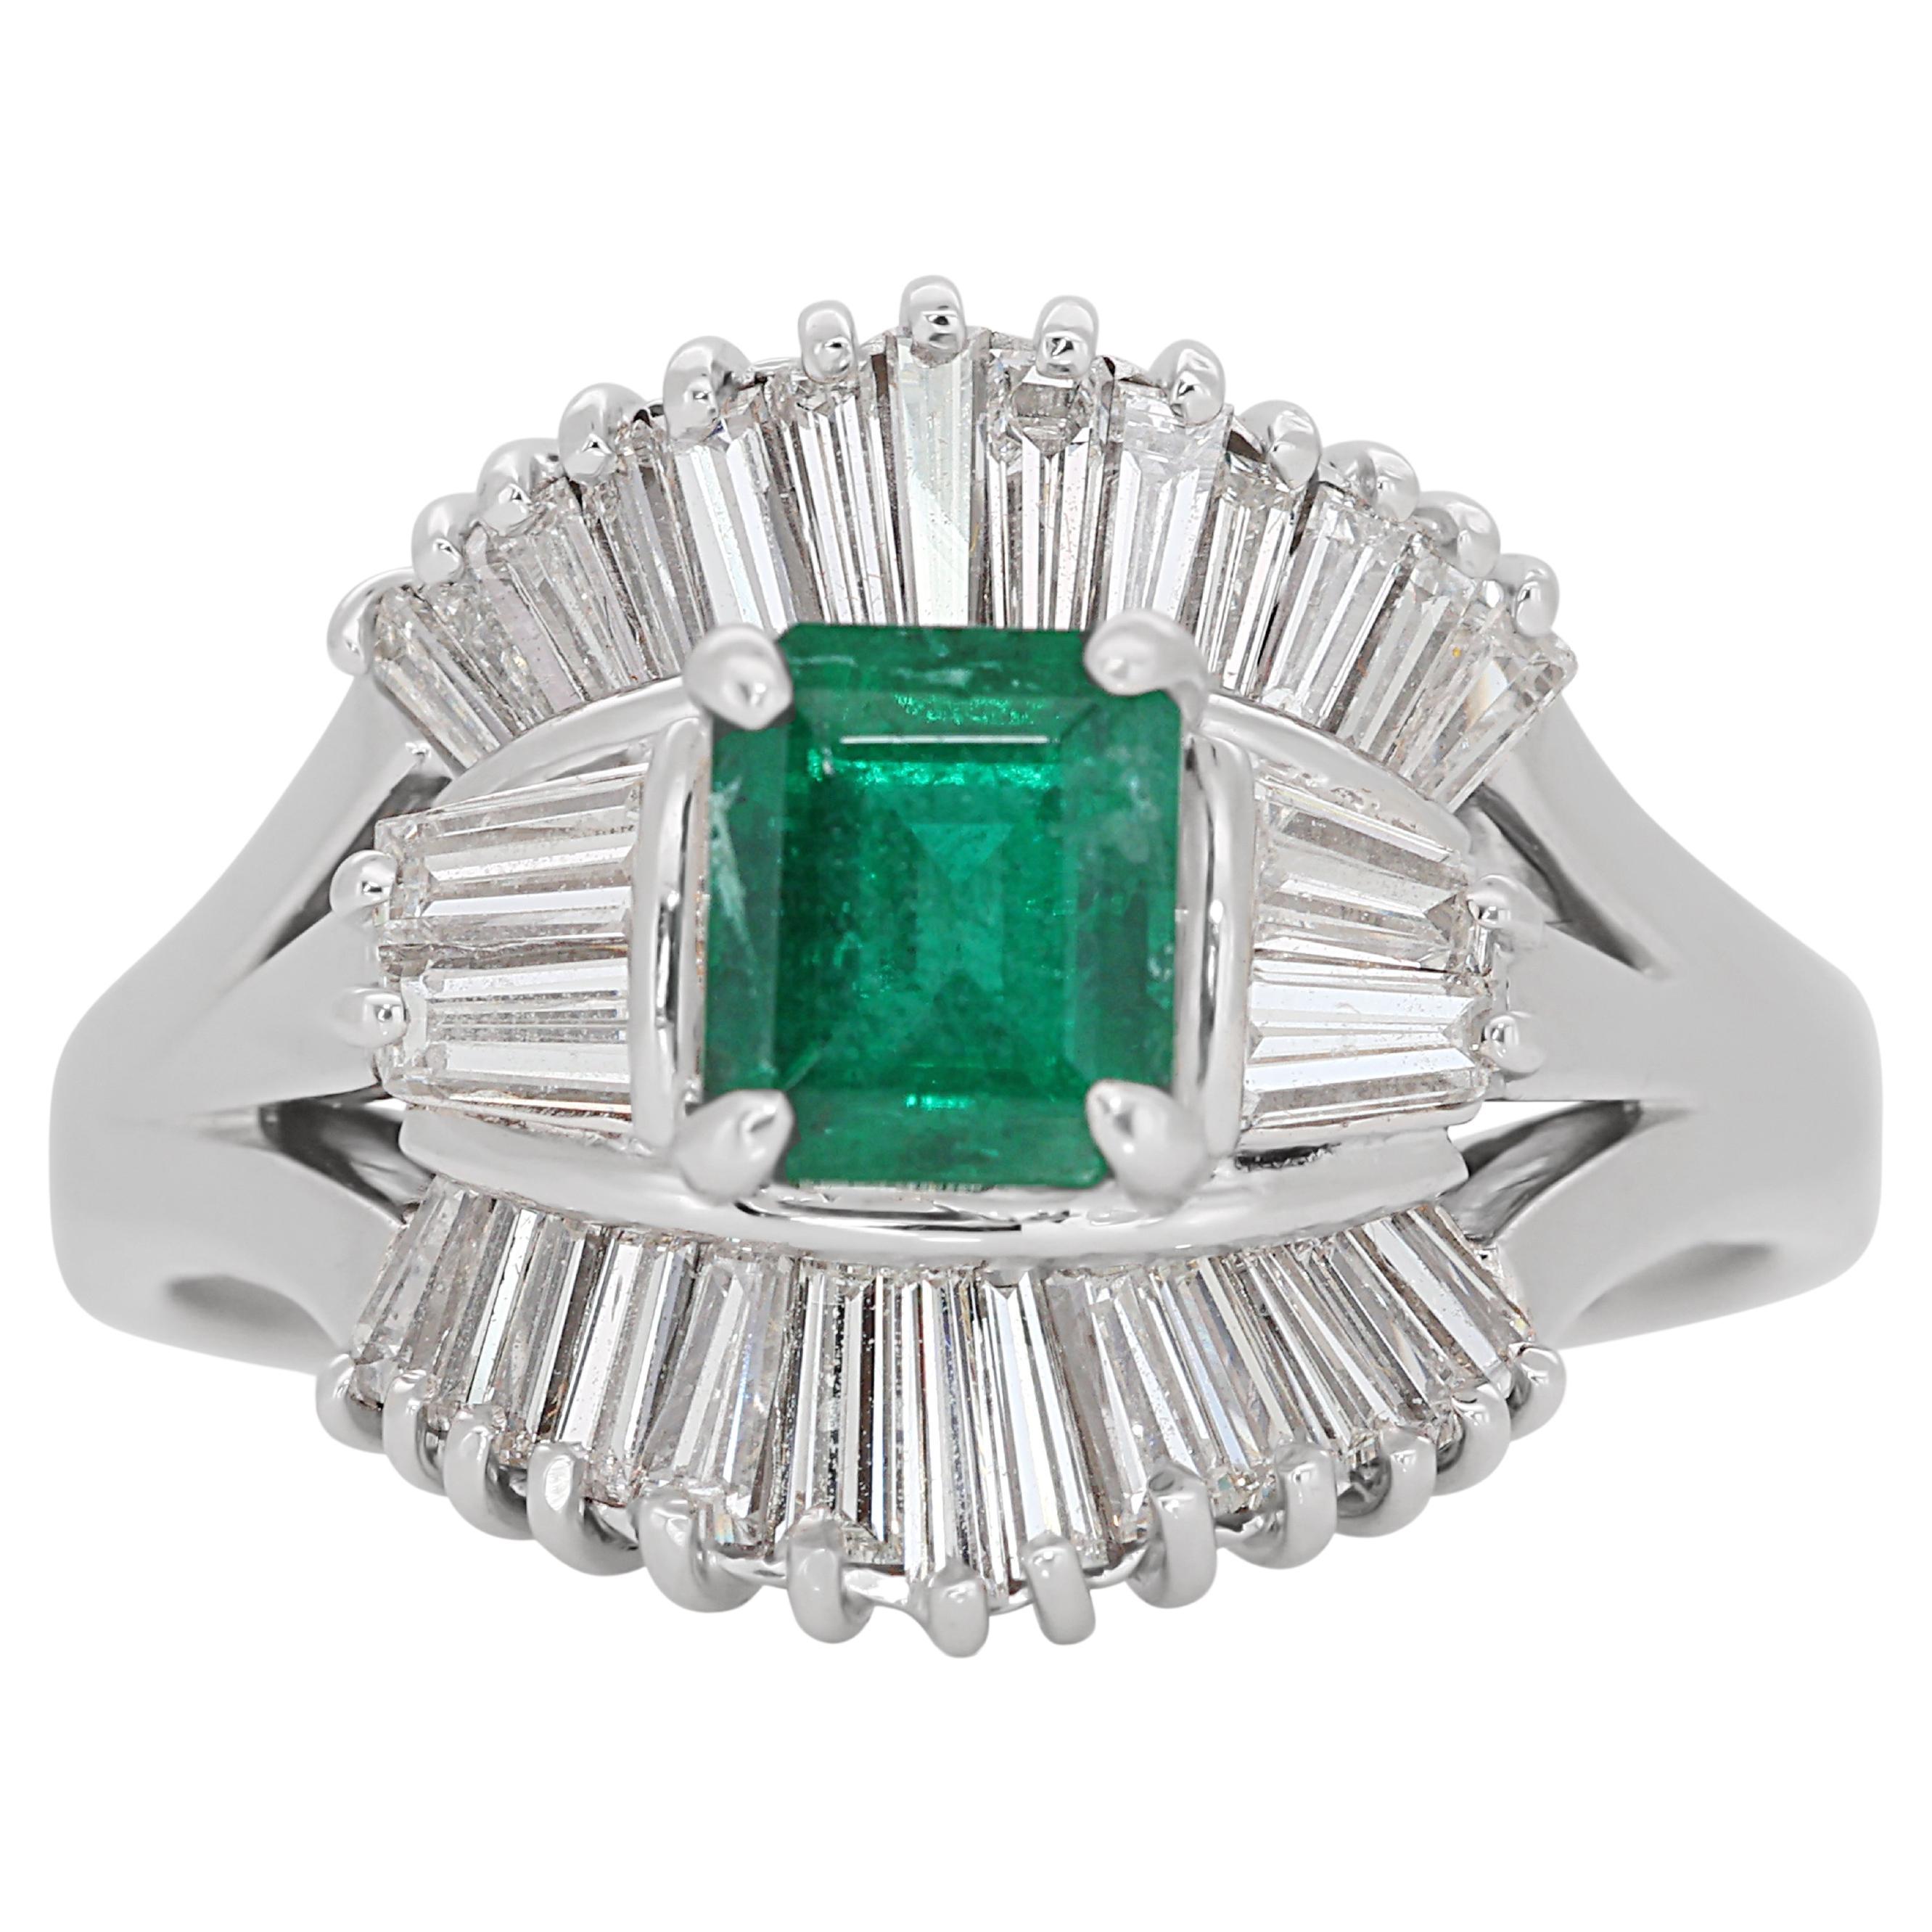 Stunning 2.08ct Emerald and Diamonds Halo Ring in 18k White Gold - IGI Certified